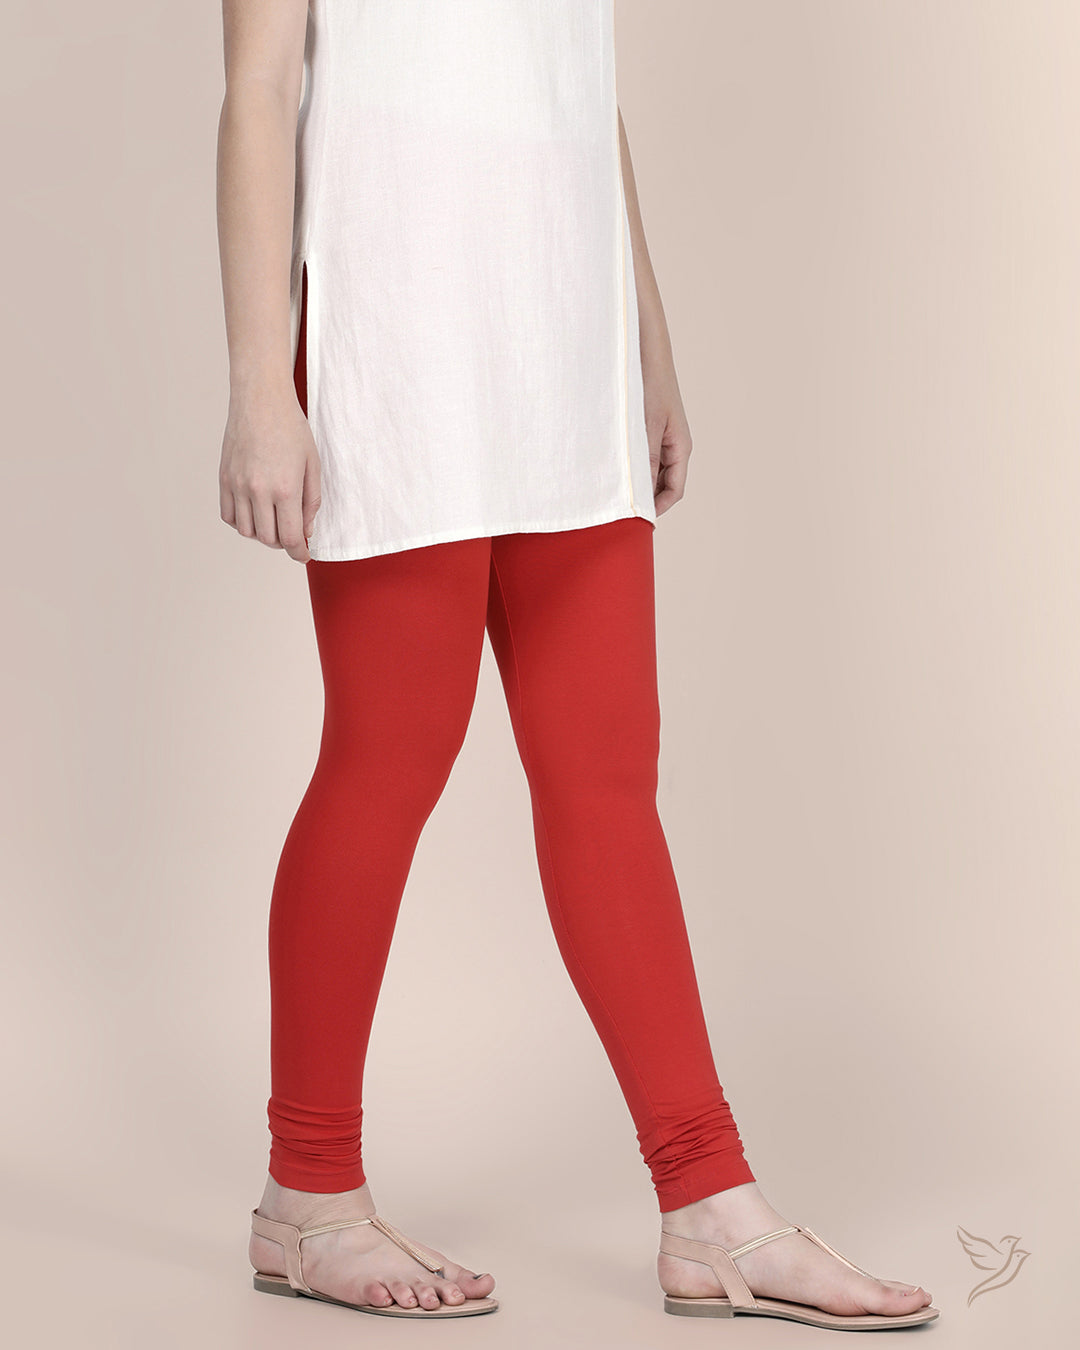 Red Chilli Cotton Churidar Legging for College girls